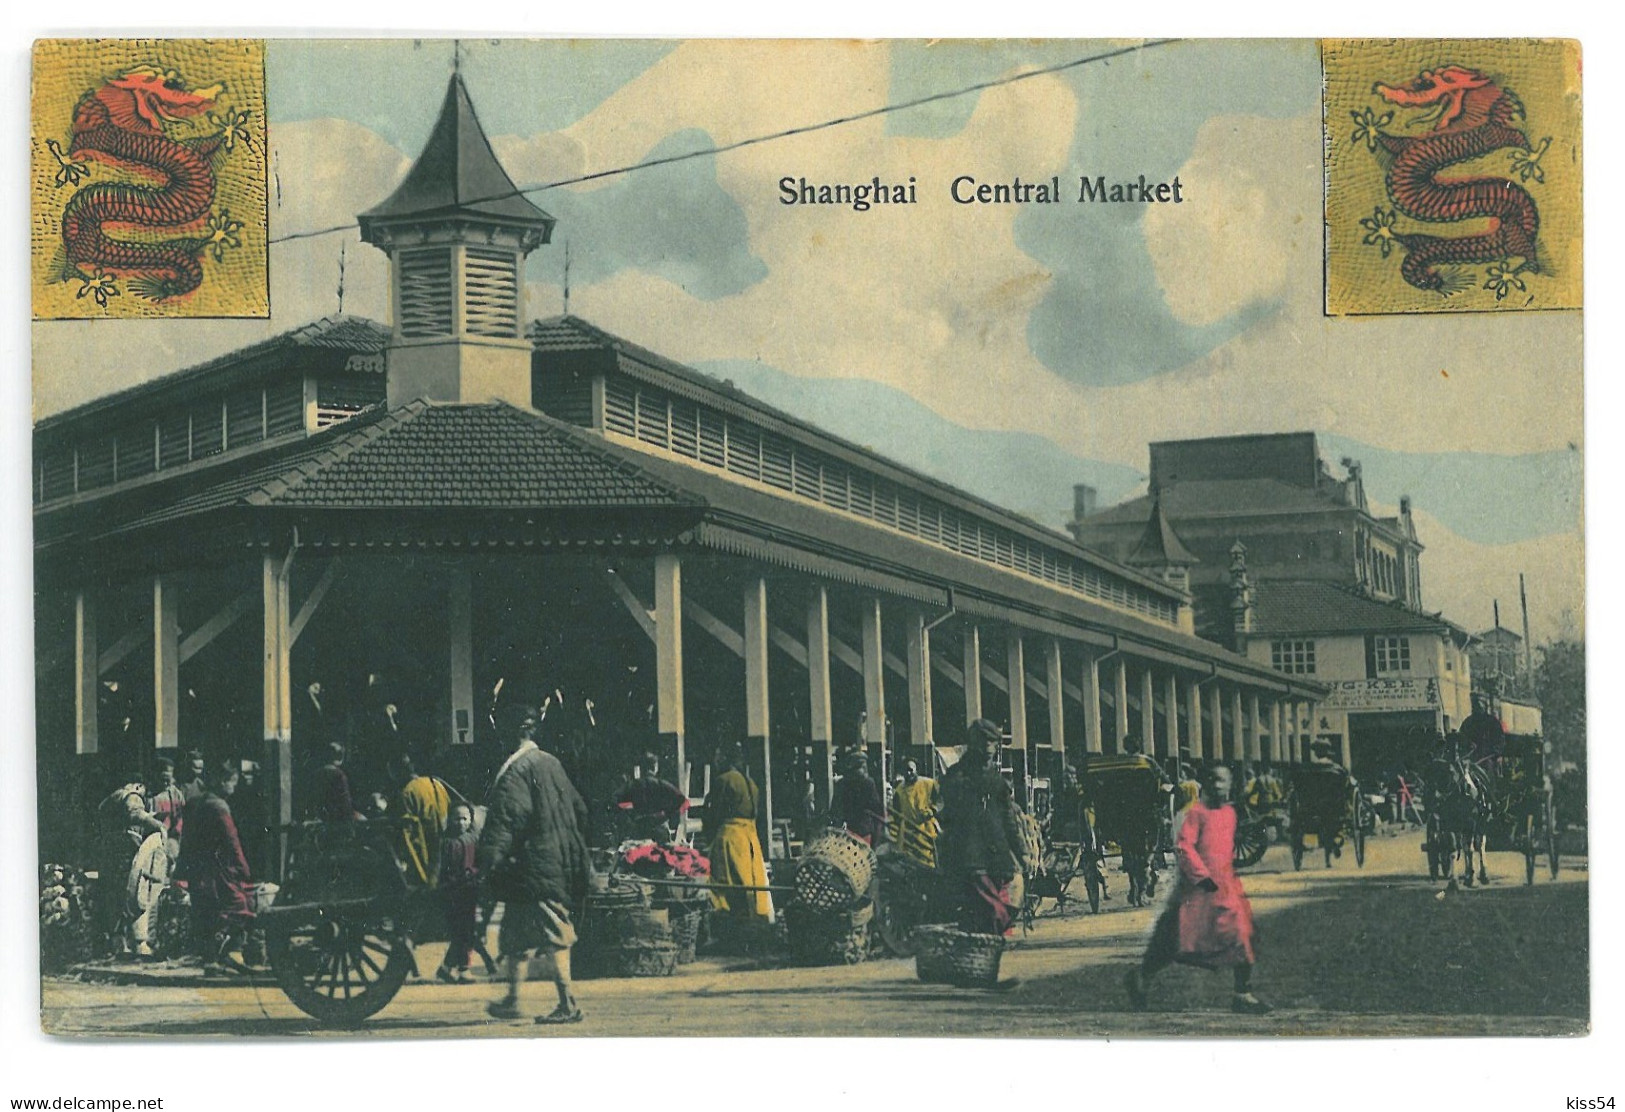 CH 57 - 20478 SHANGHAI, Market, China - Old Postcard - Unused - China